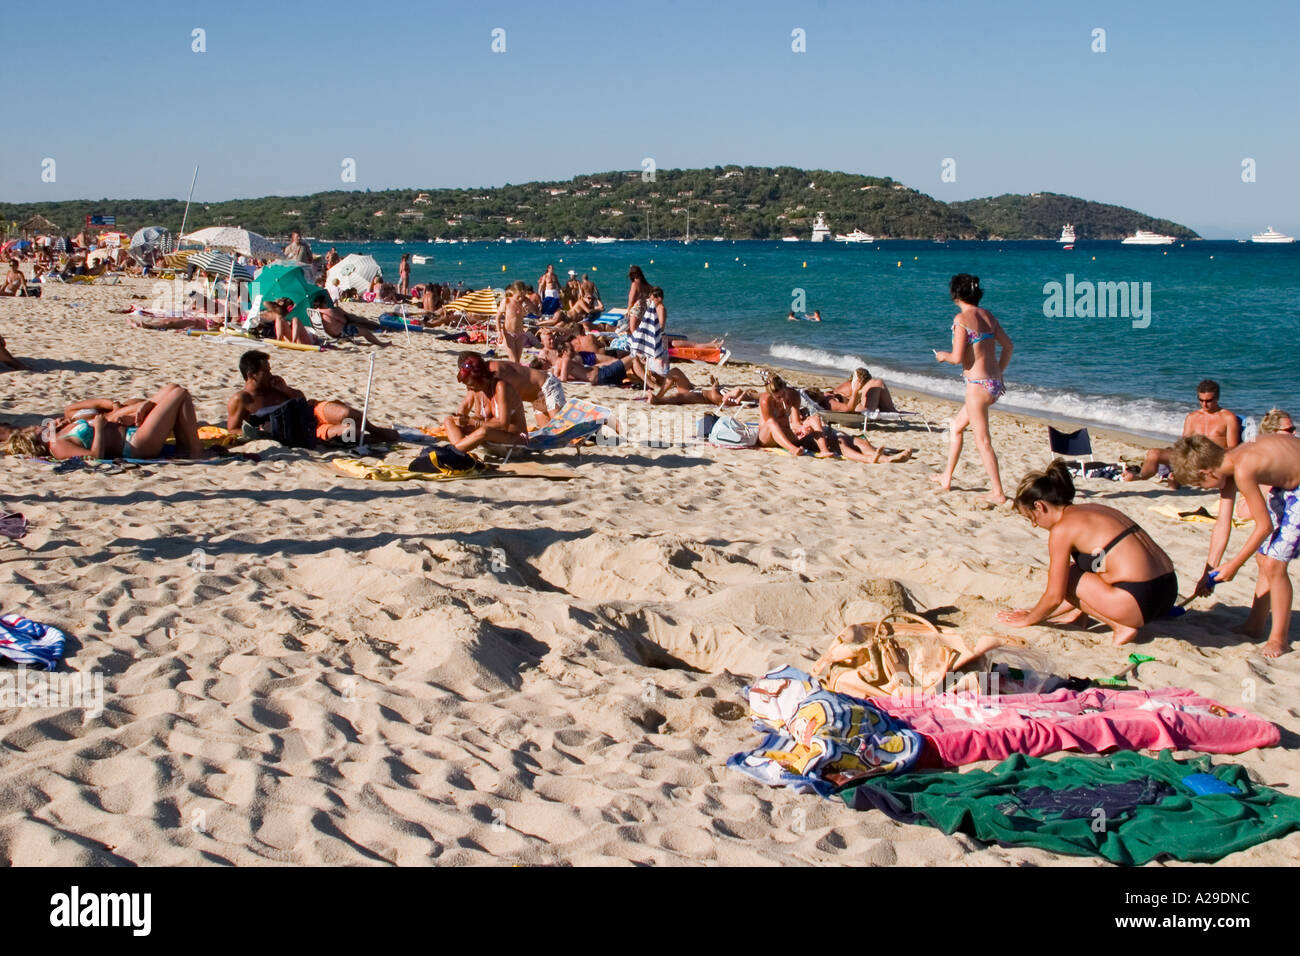 Plage De Pampelonne Saint Tropez Frankreich Stockfotografie Alamy